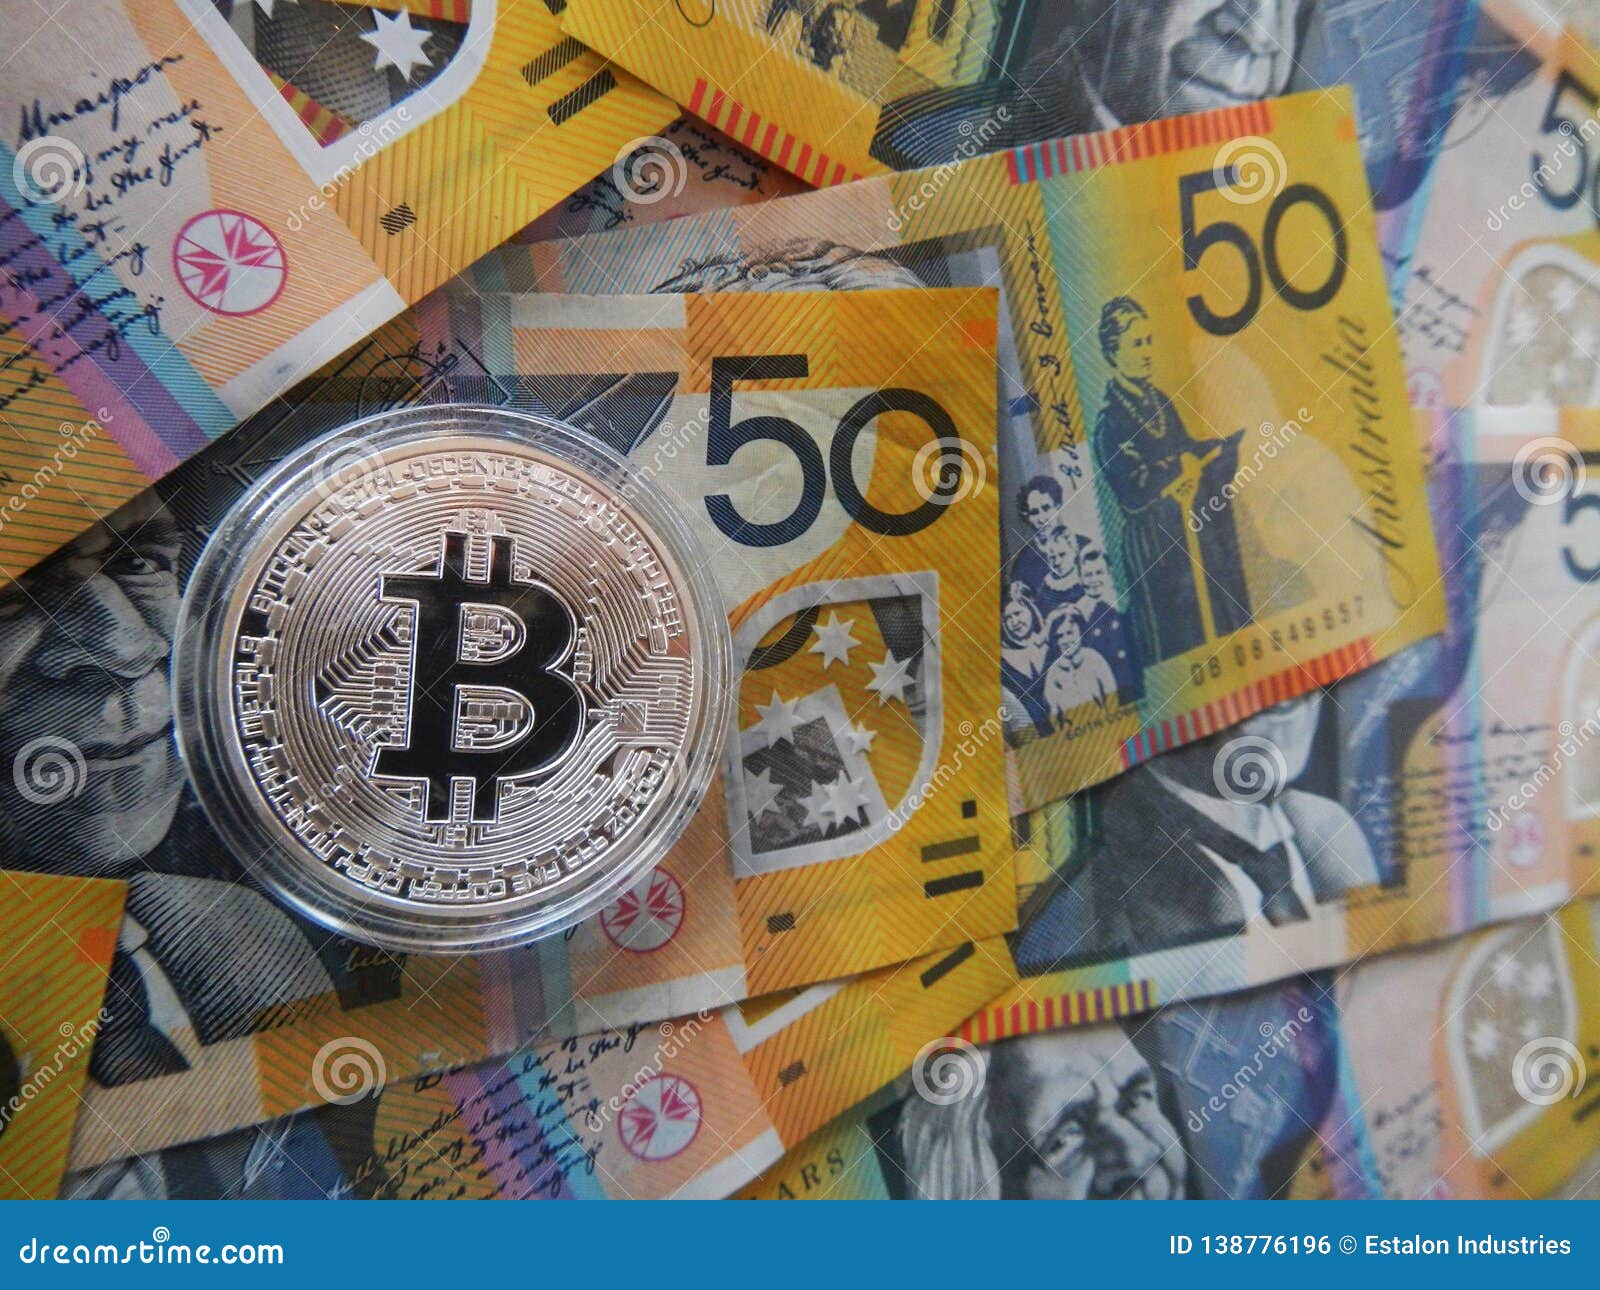 buy bitcoins cash deposit australia